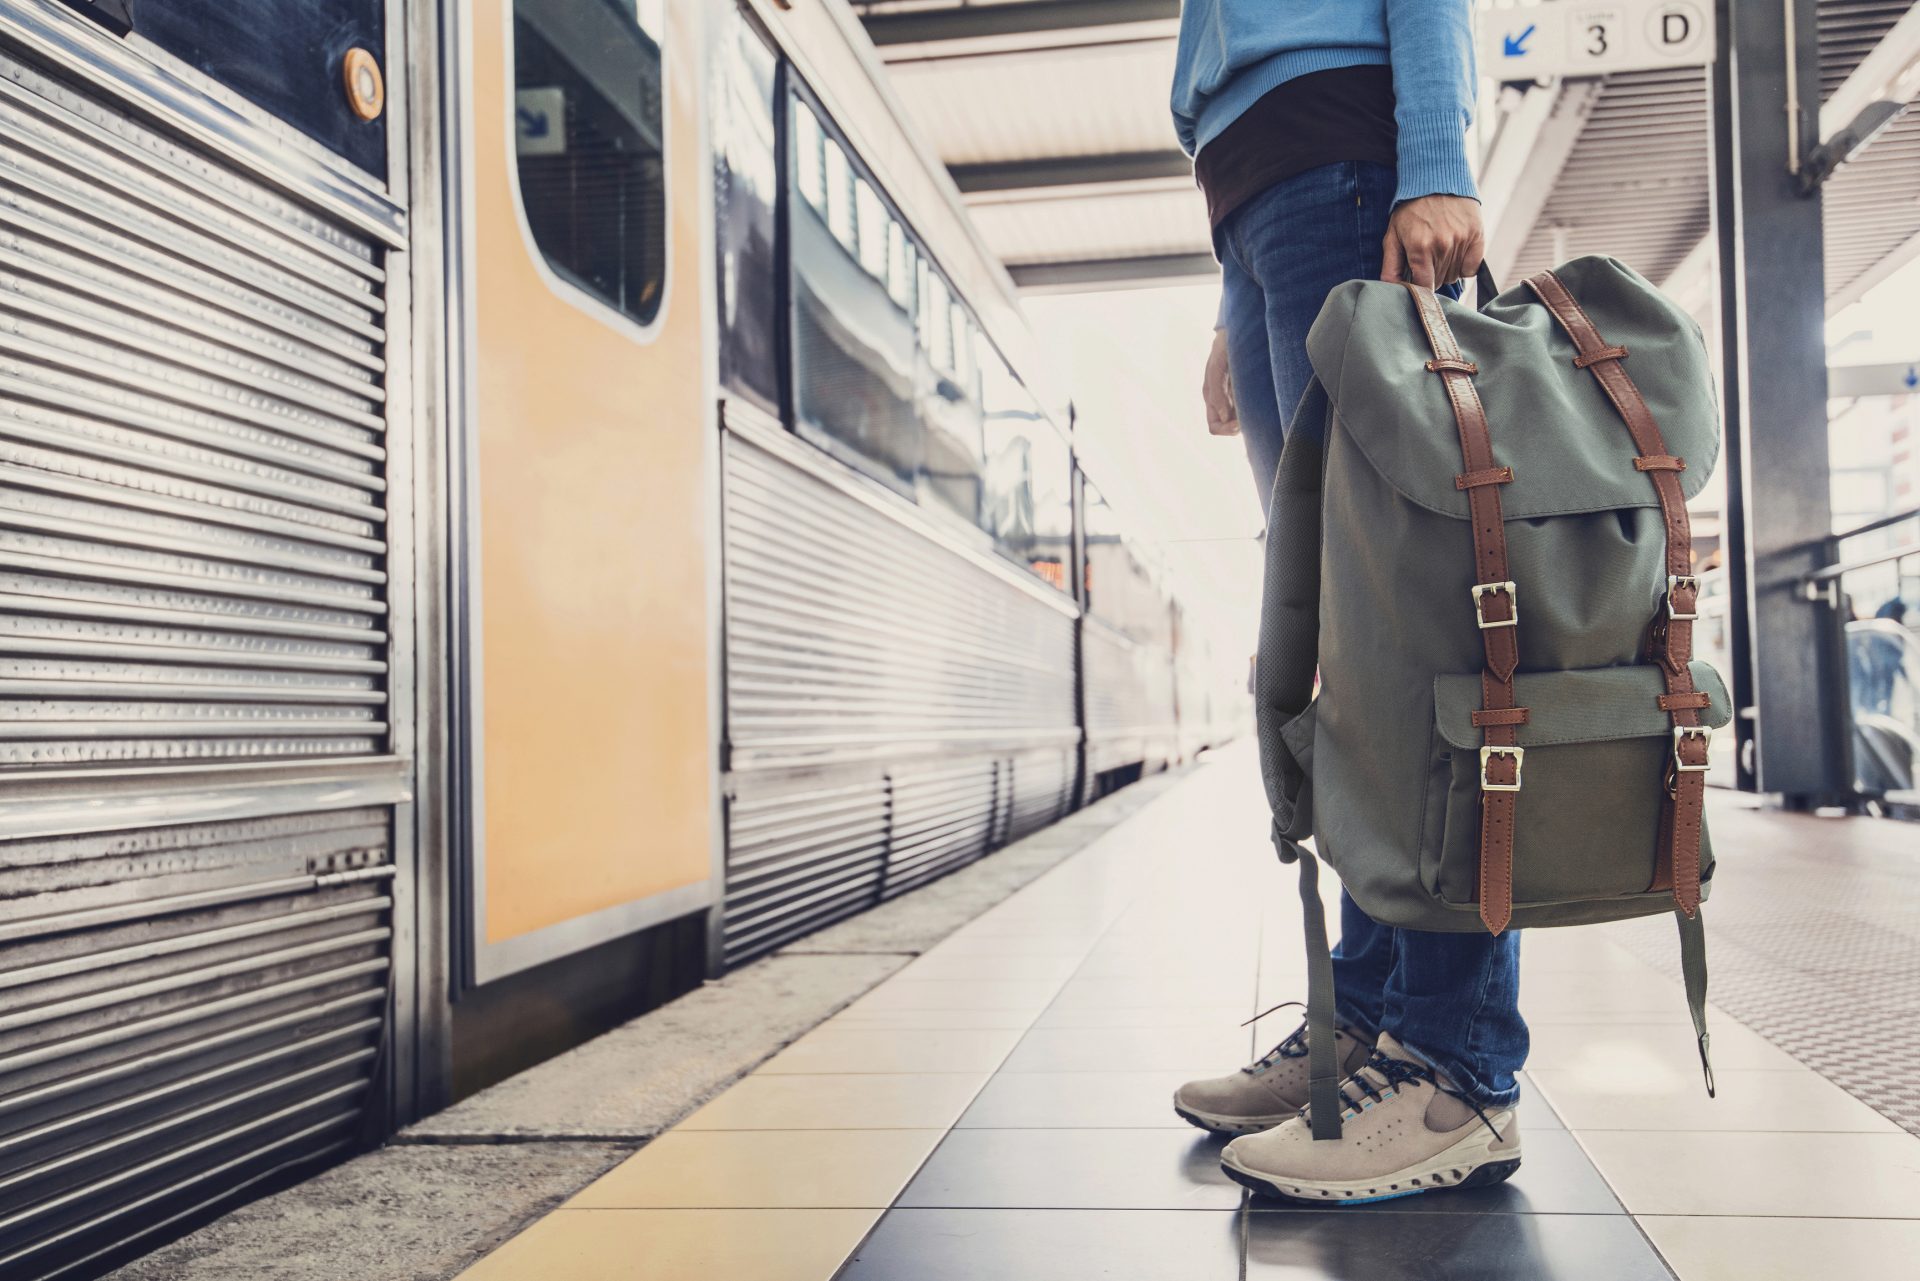 60,000 Europeans aged 18-20 to receive free travel rail pass